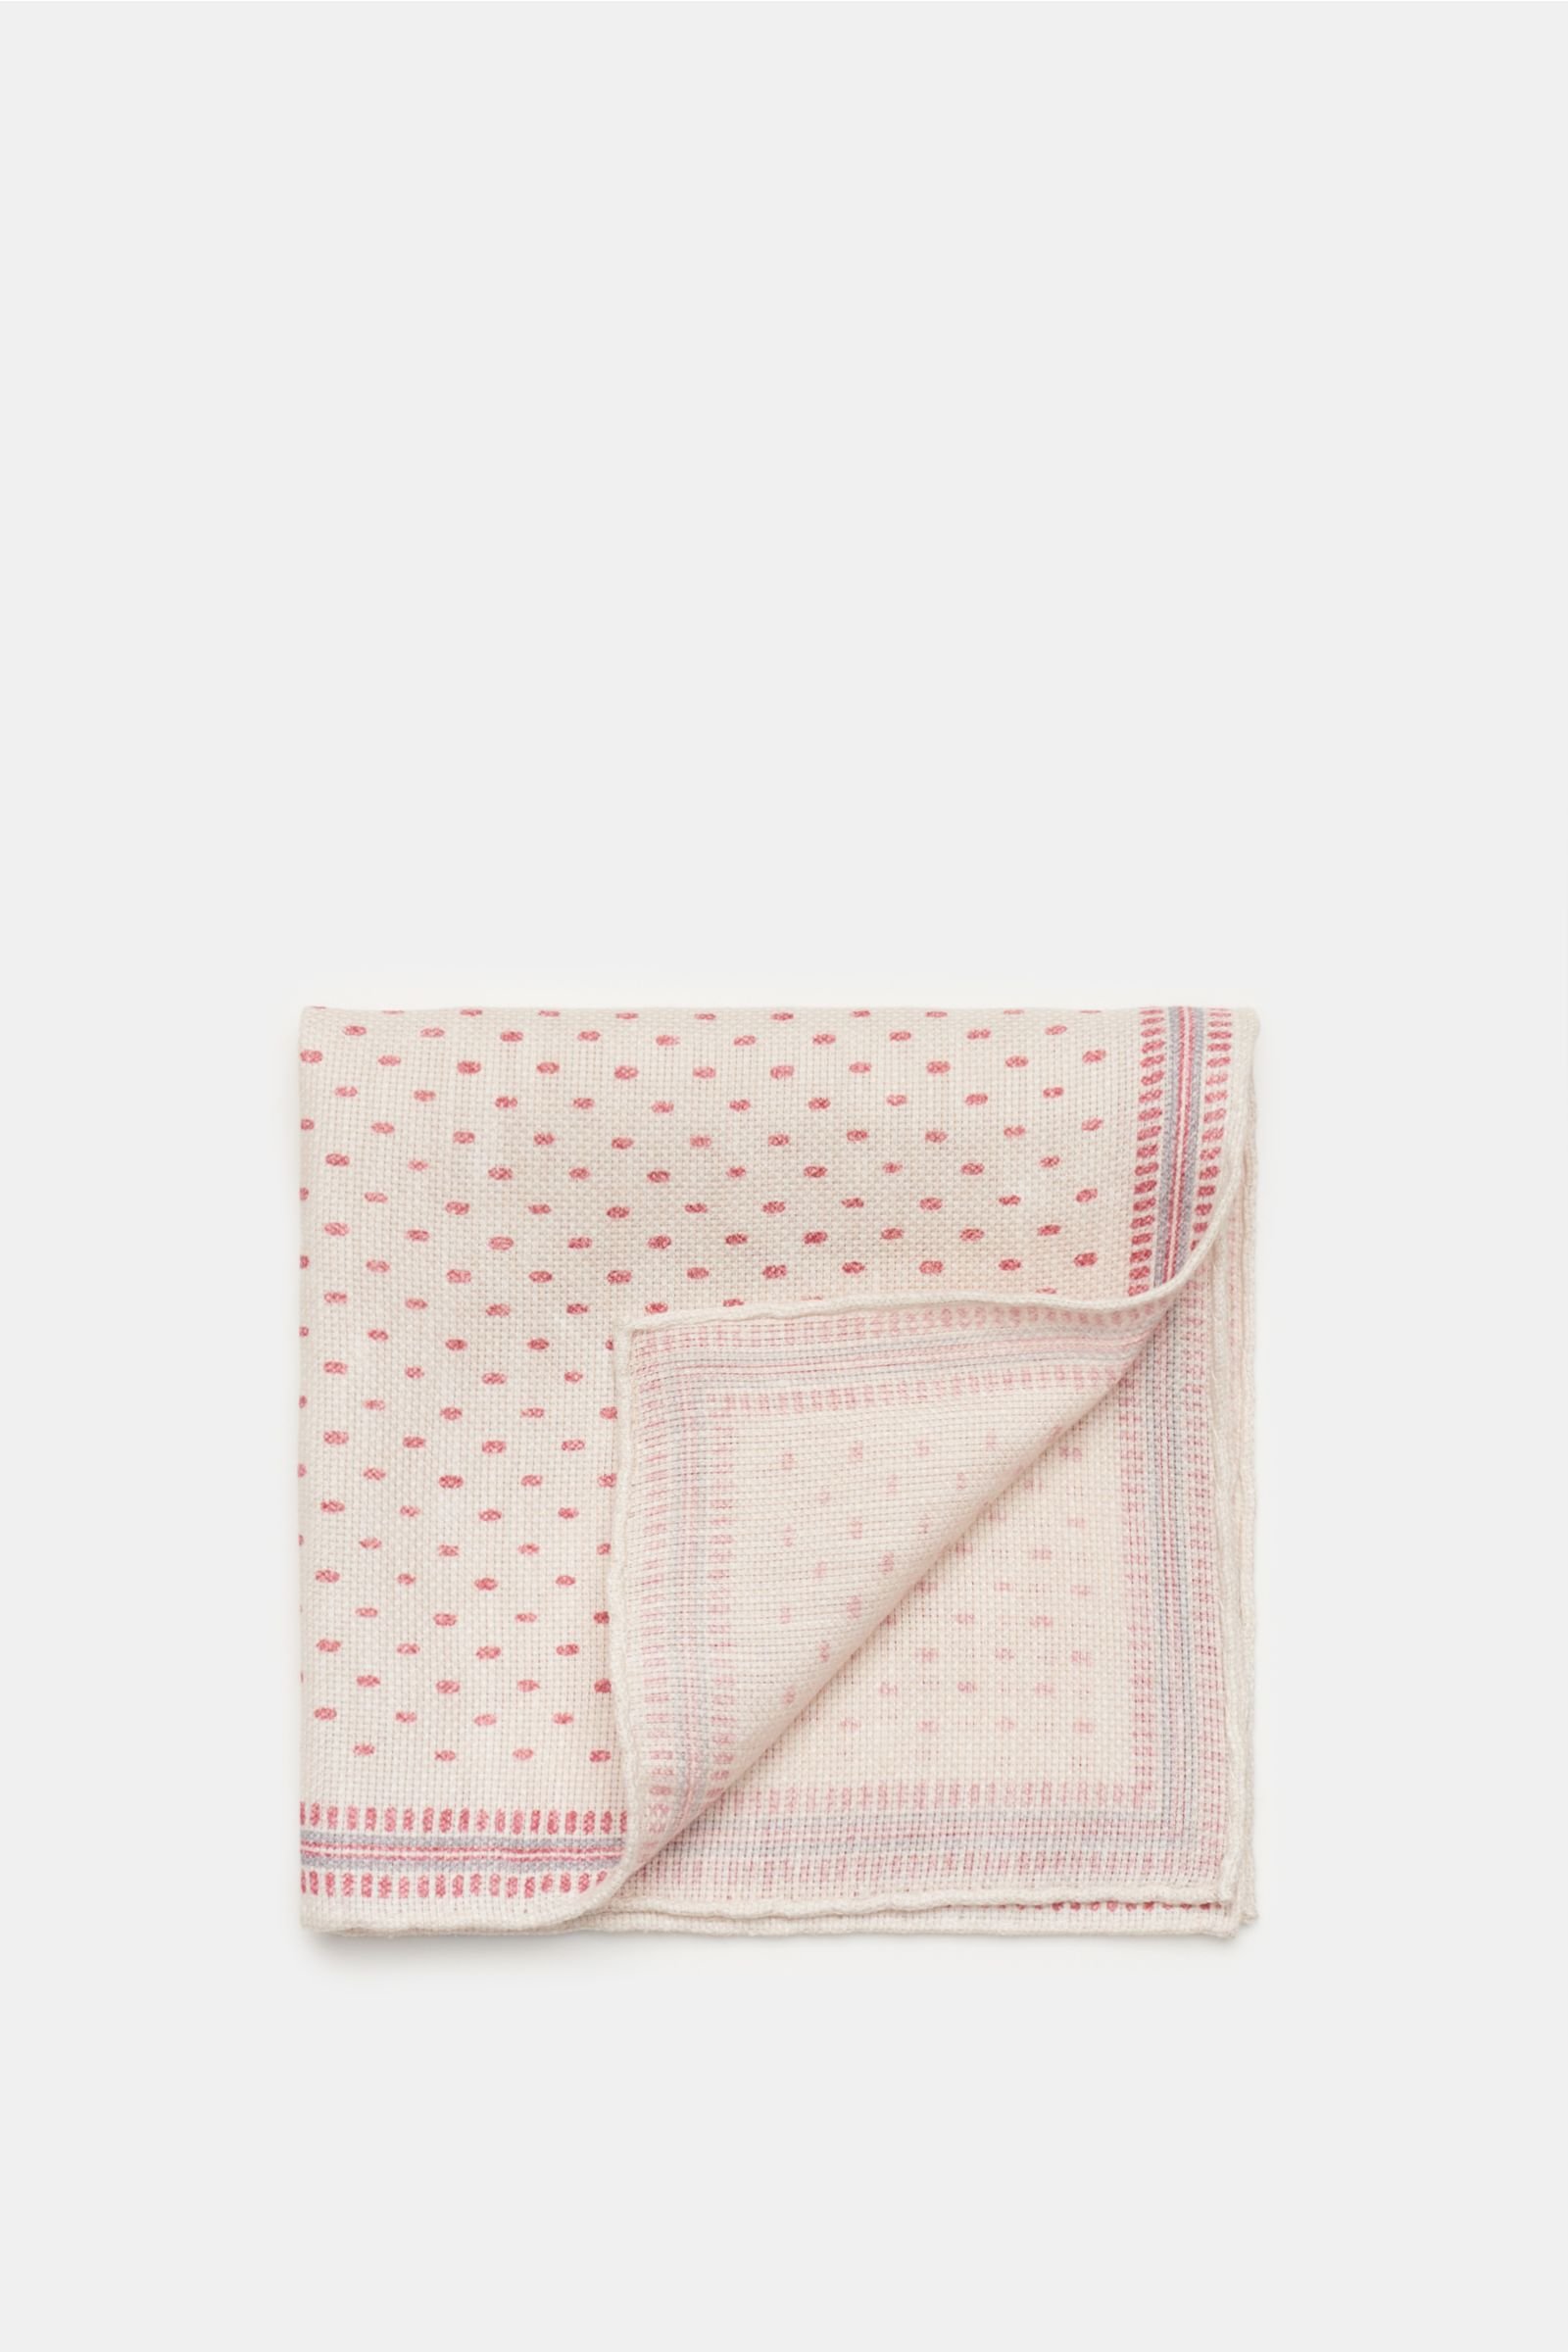 Pocket square cream/magenta patterned